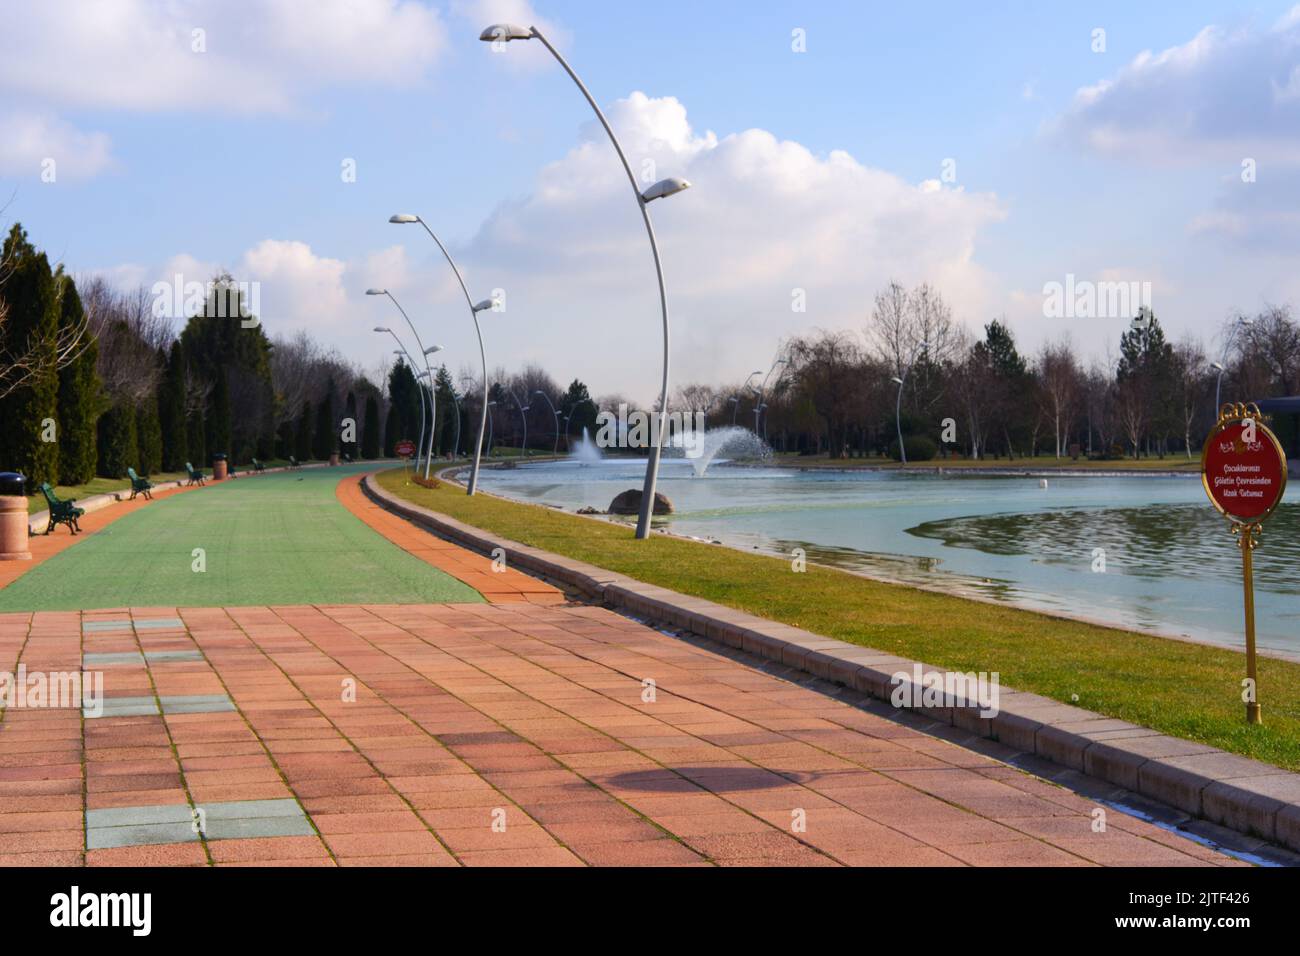 Kentpark urban waterside Park in Eskisehir Turkey Stock Photo